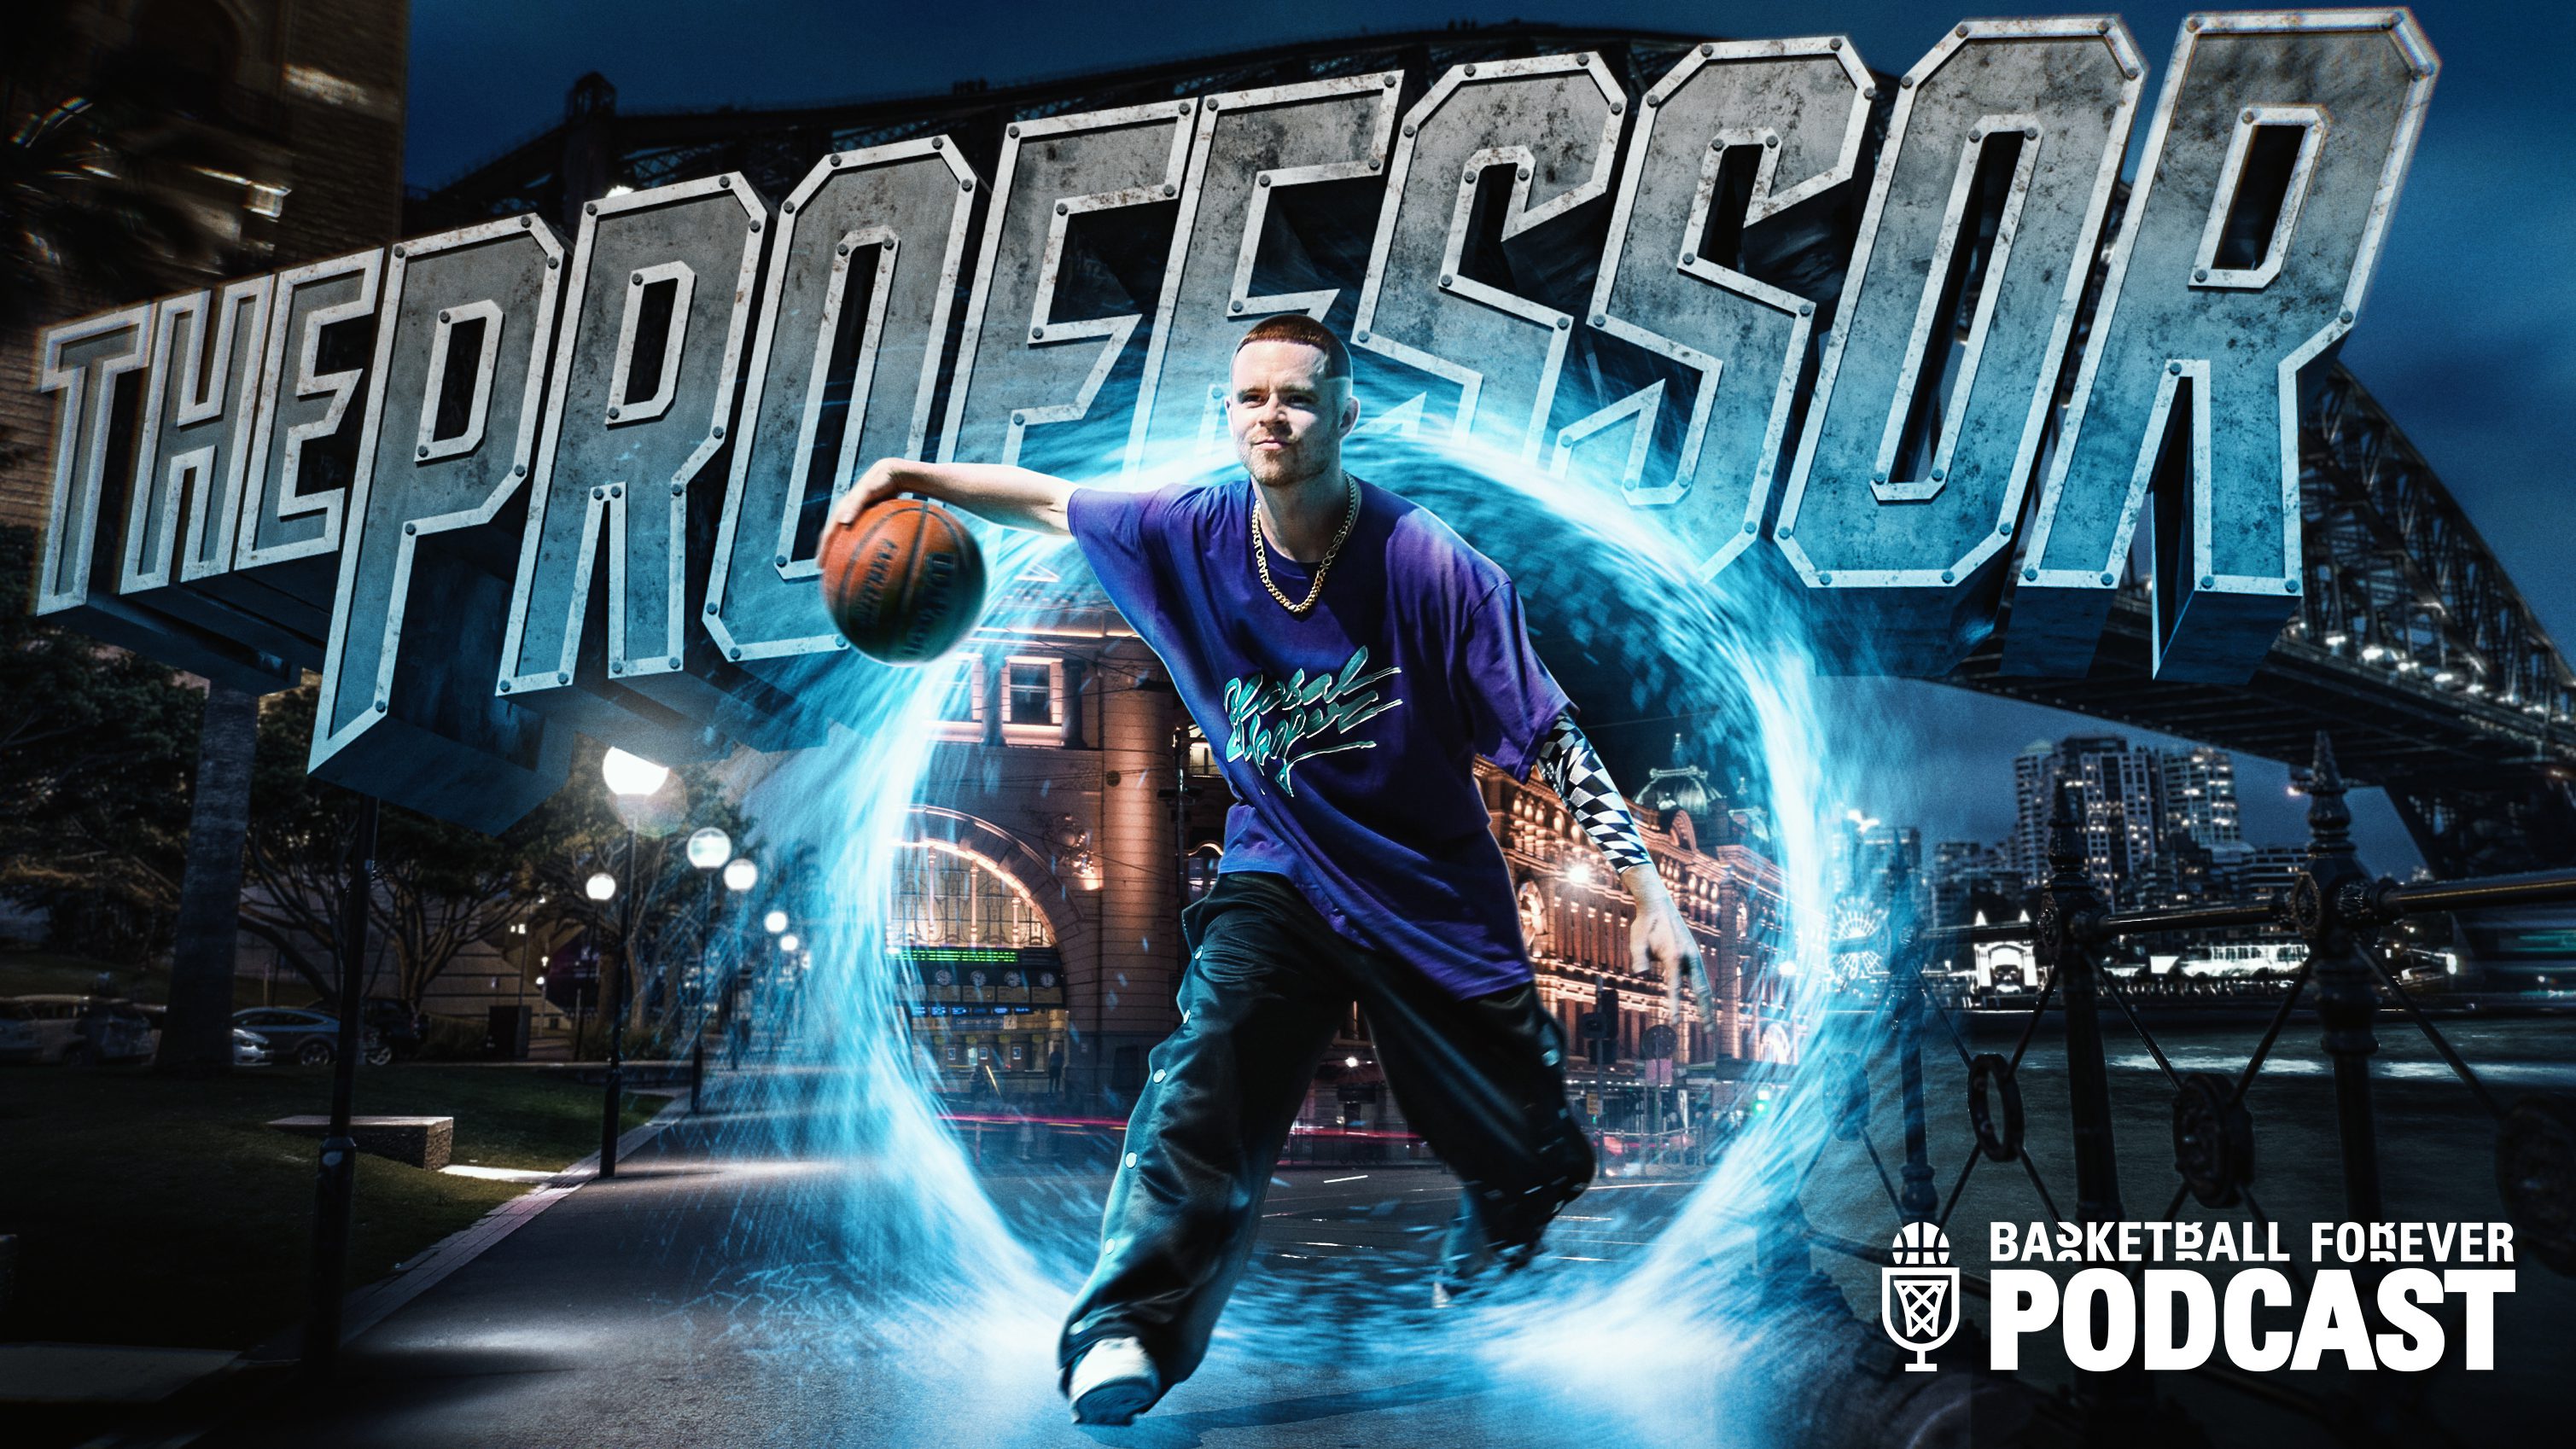 Streetball Legend ‘The Professor’ Shares Wild Untold Stories